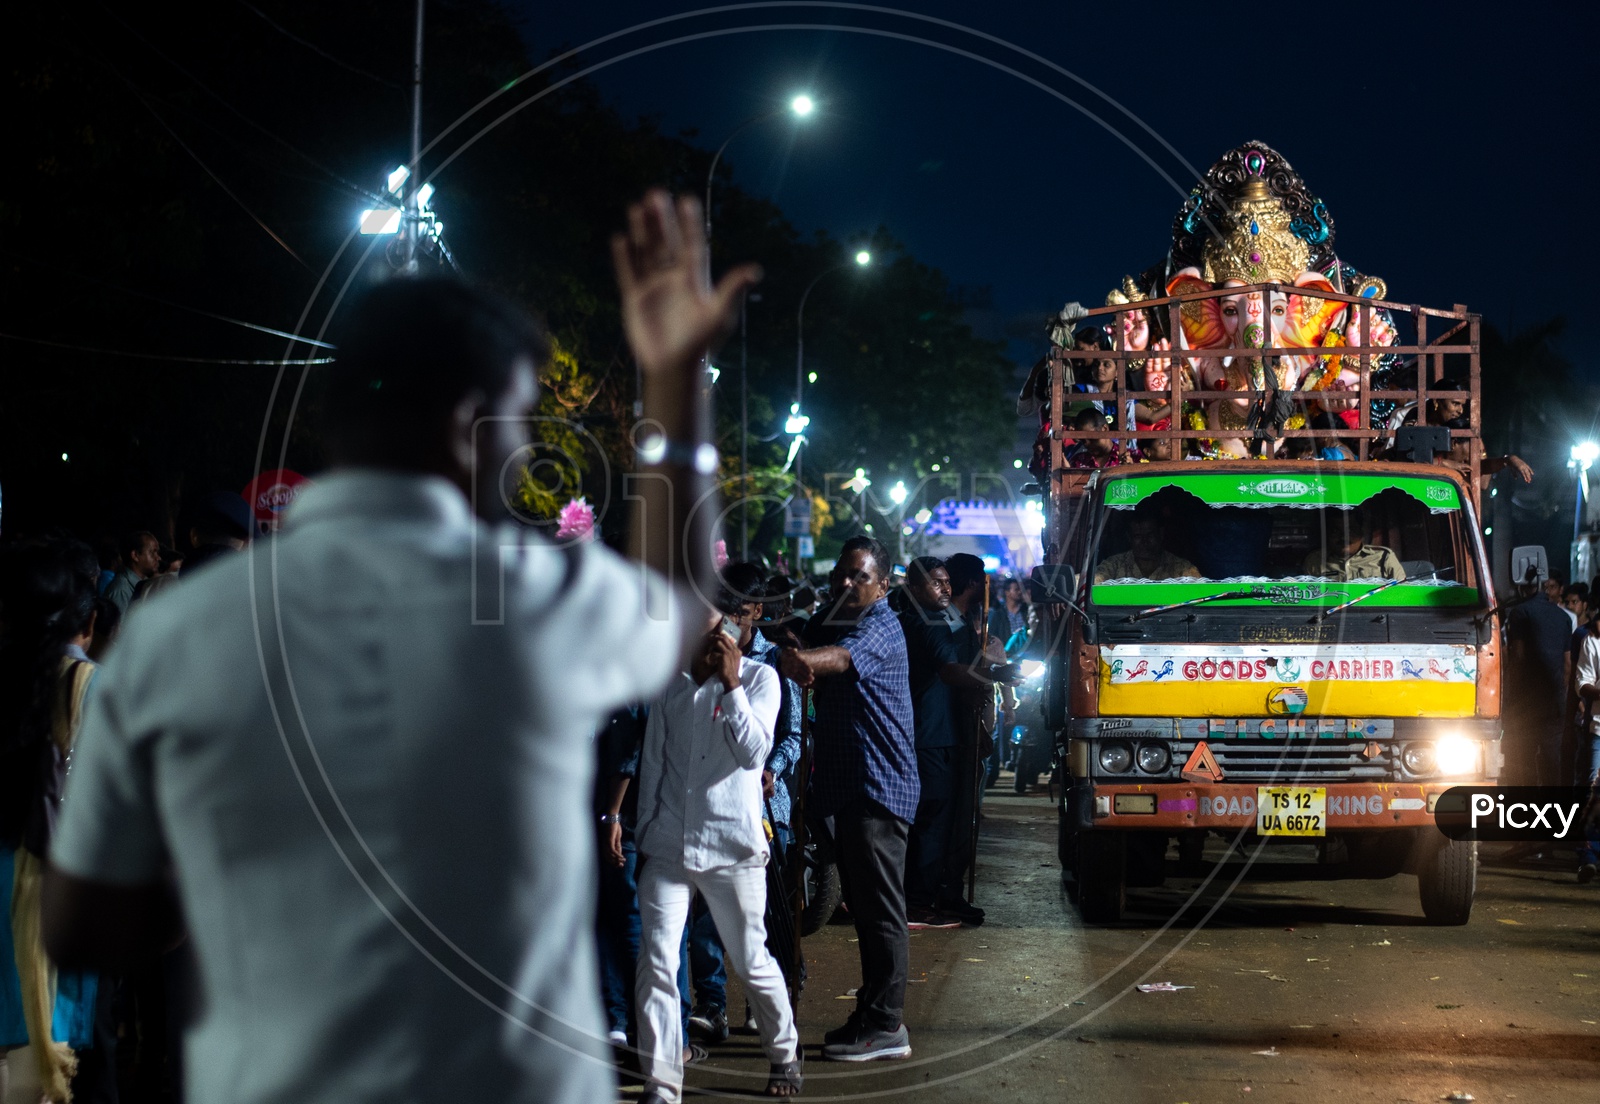 Lord Ganesh Idols in Procession At Tank Bund  Before Immersion Or Visarjan  In Hussain Sagar Lake  in Hyderabad